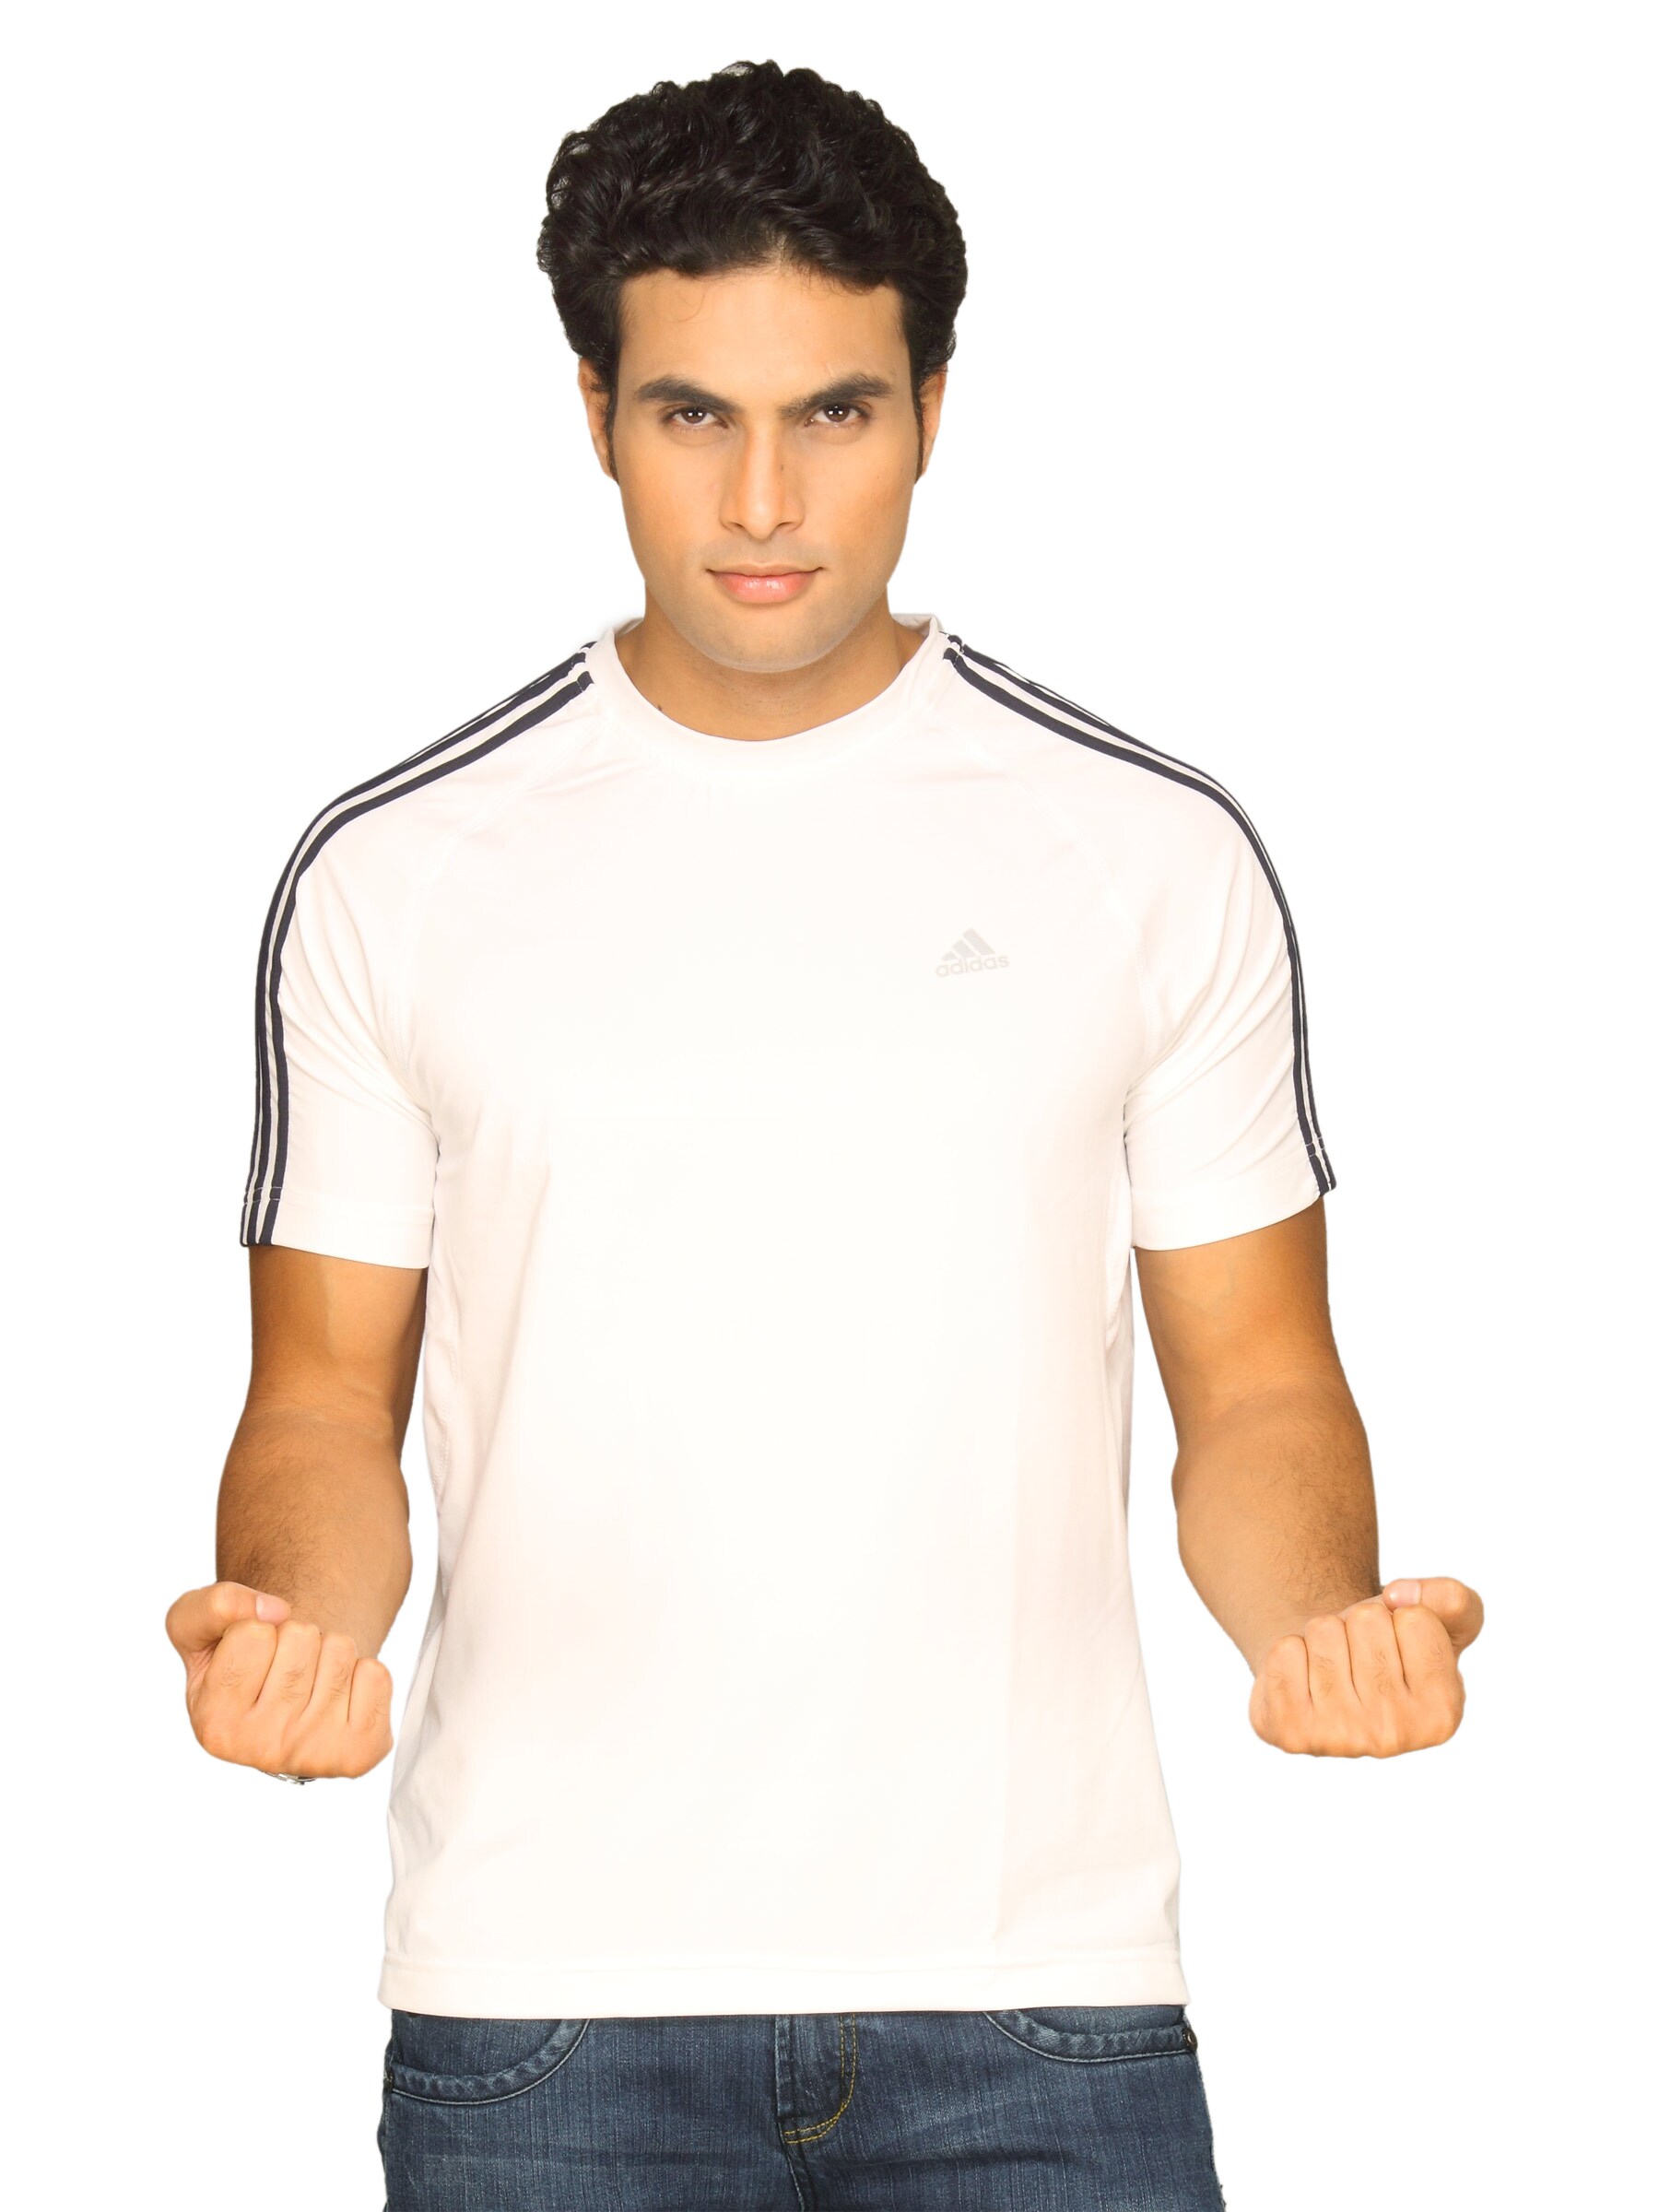 ADIDAS Men's Fit White T-shirt